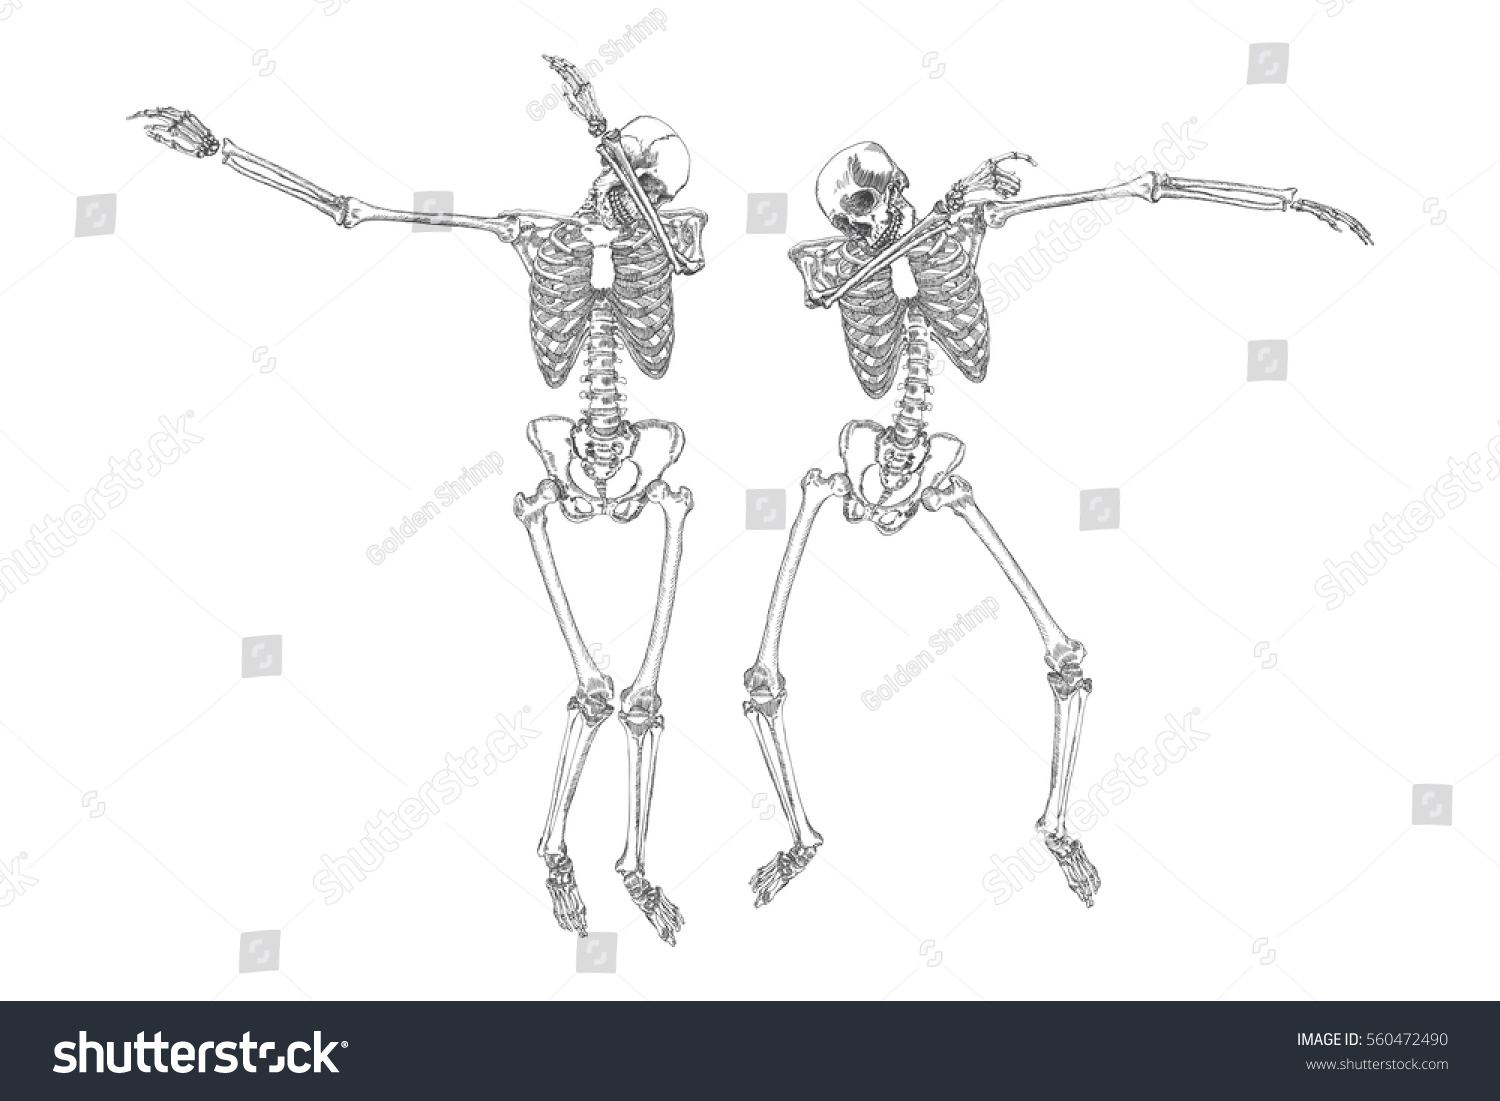 Dancing Skeleton man vector